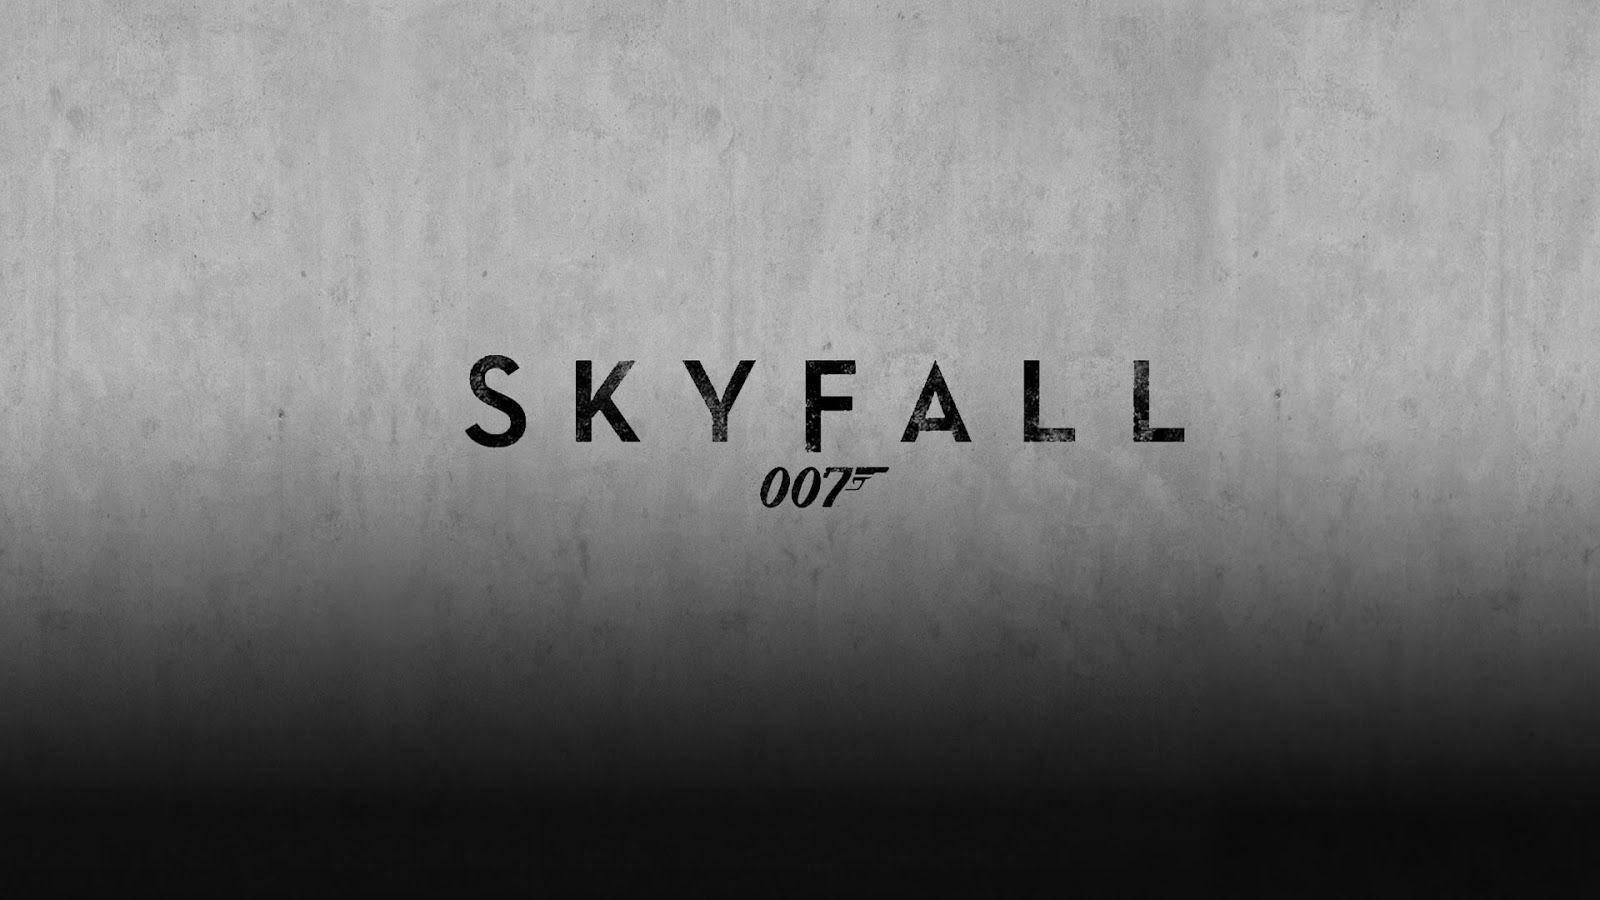 James Bond Skyfall Gray Poster